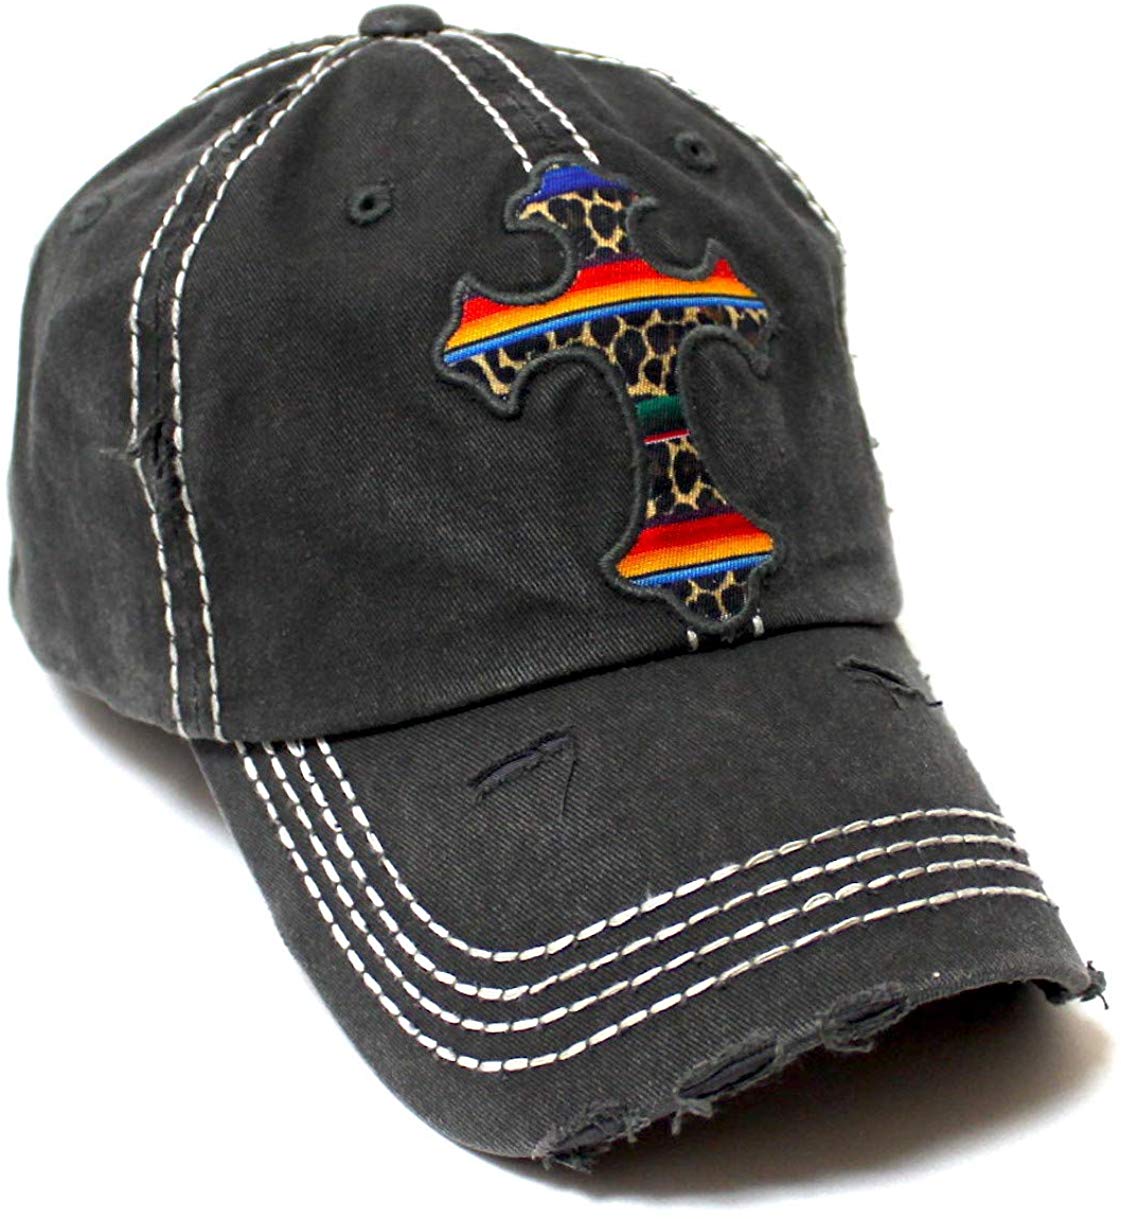 Classic Distressed Ballcap Christian Cross Monogram Embroidery, Serape Leopard Patterned Adjustable Hat, Vintage Blk - Caps 'N Vintage 